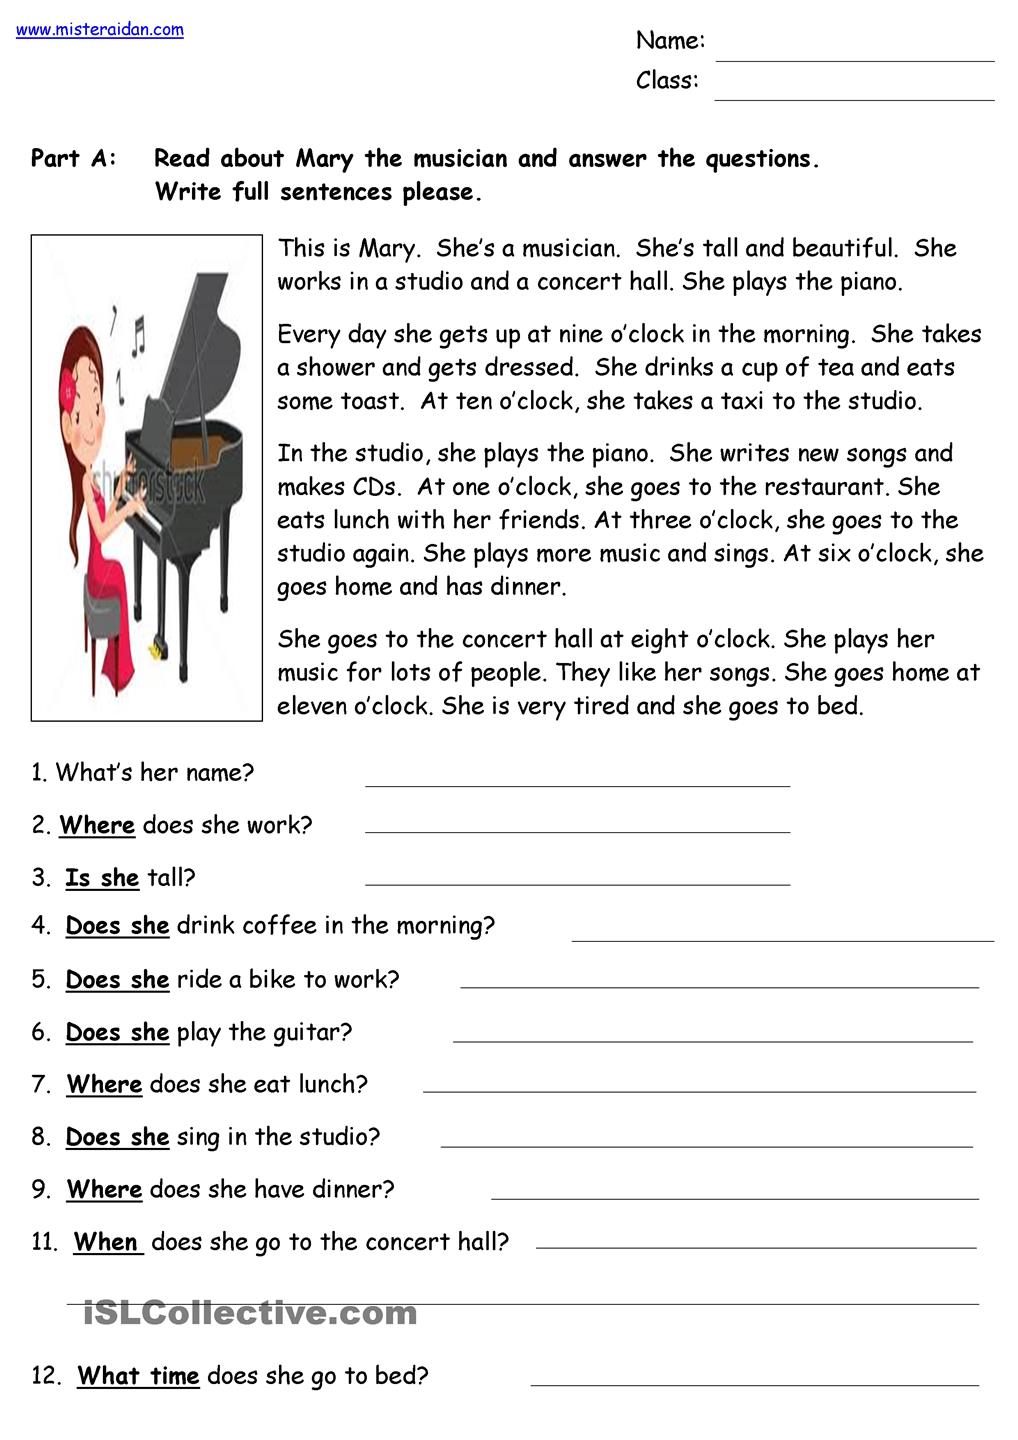 reading-comprehension-worksheets-for-11-year-olds-dorothy-james-11